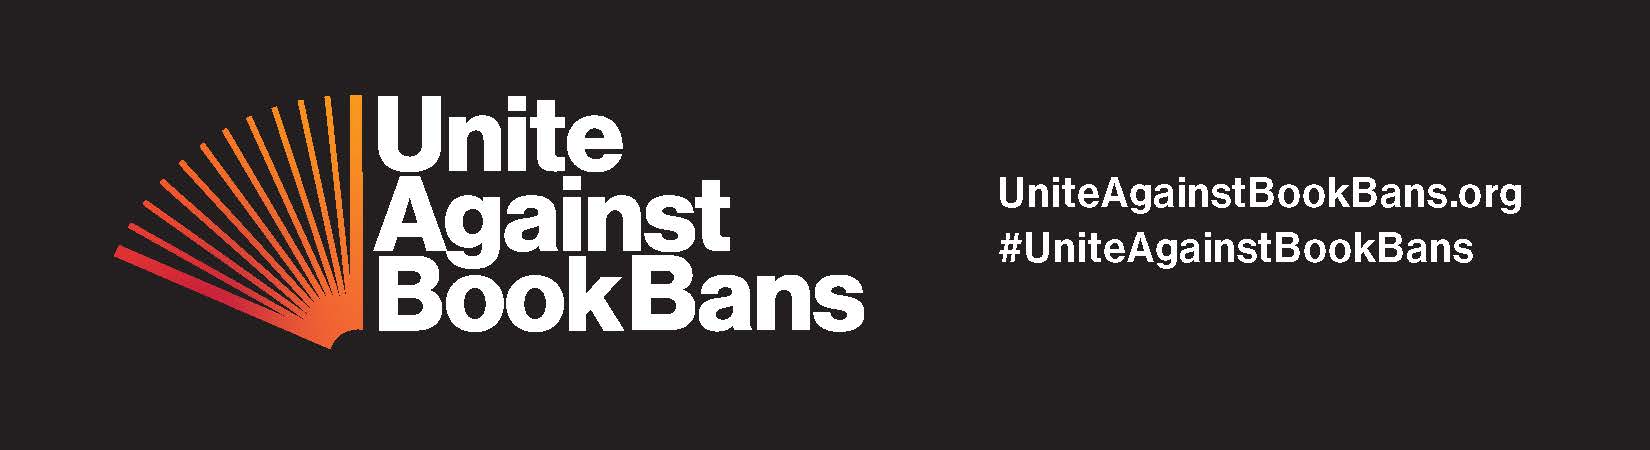 Black box with Unite Against Book Bans logo, URL, and hashtag.